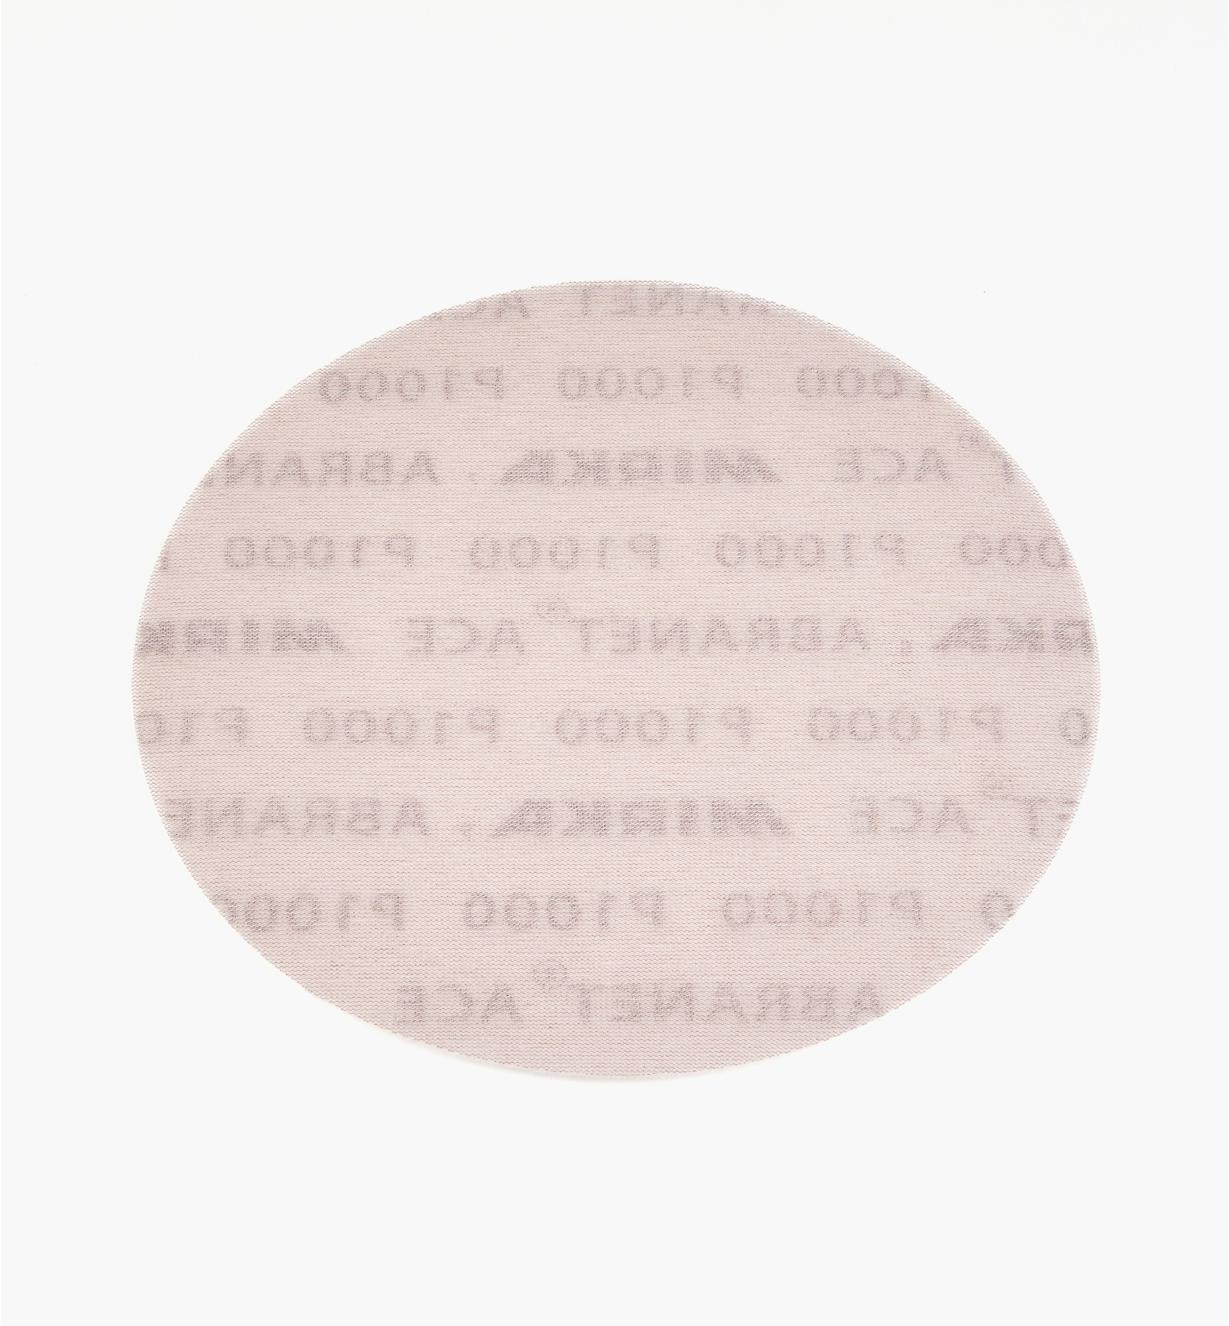 08K2877 - 1000x 9" Abranet Ace Grip Disc, ea.